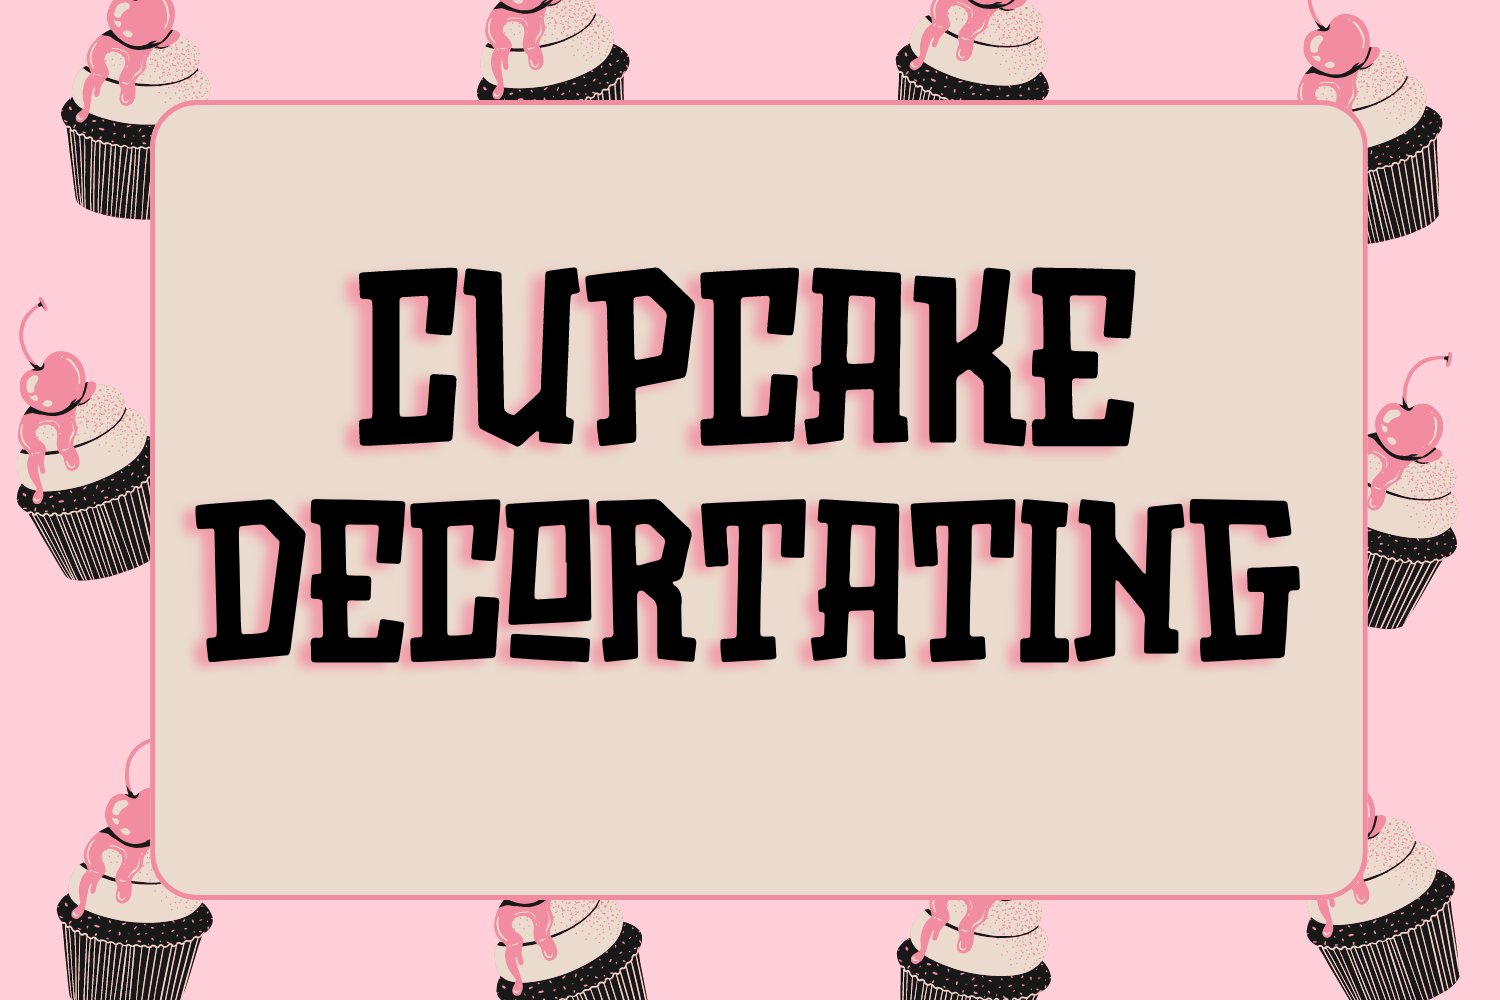 Image that says "cupcake decorating"